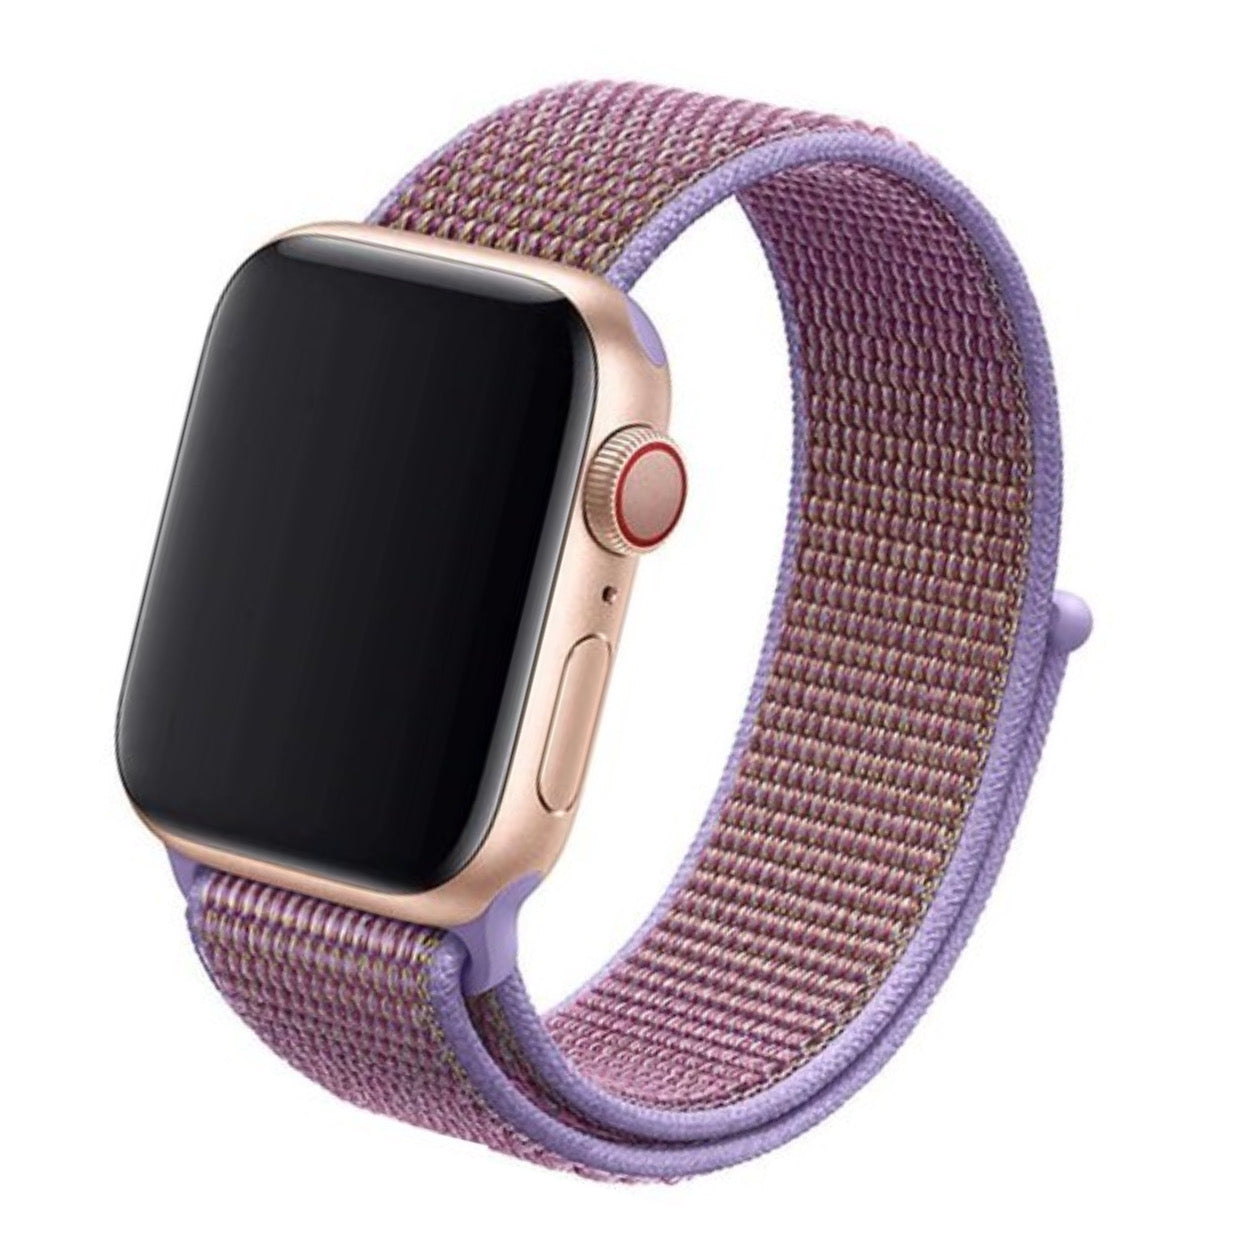 Cinturino Apple Watch in Nylon viola lilla